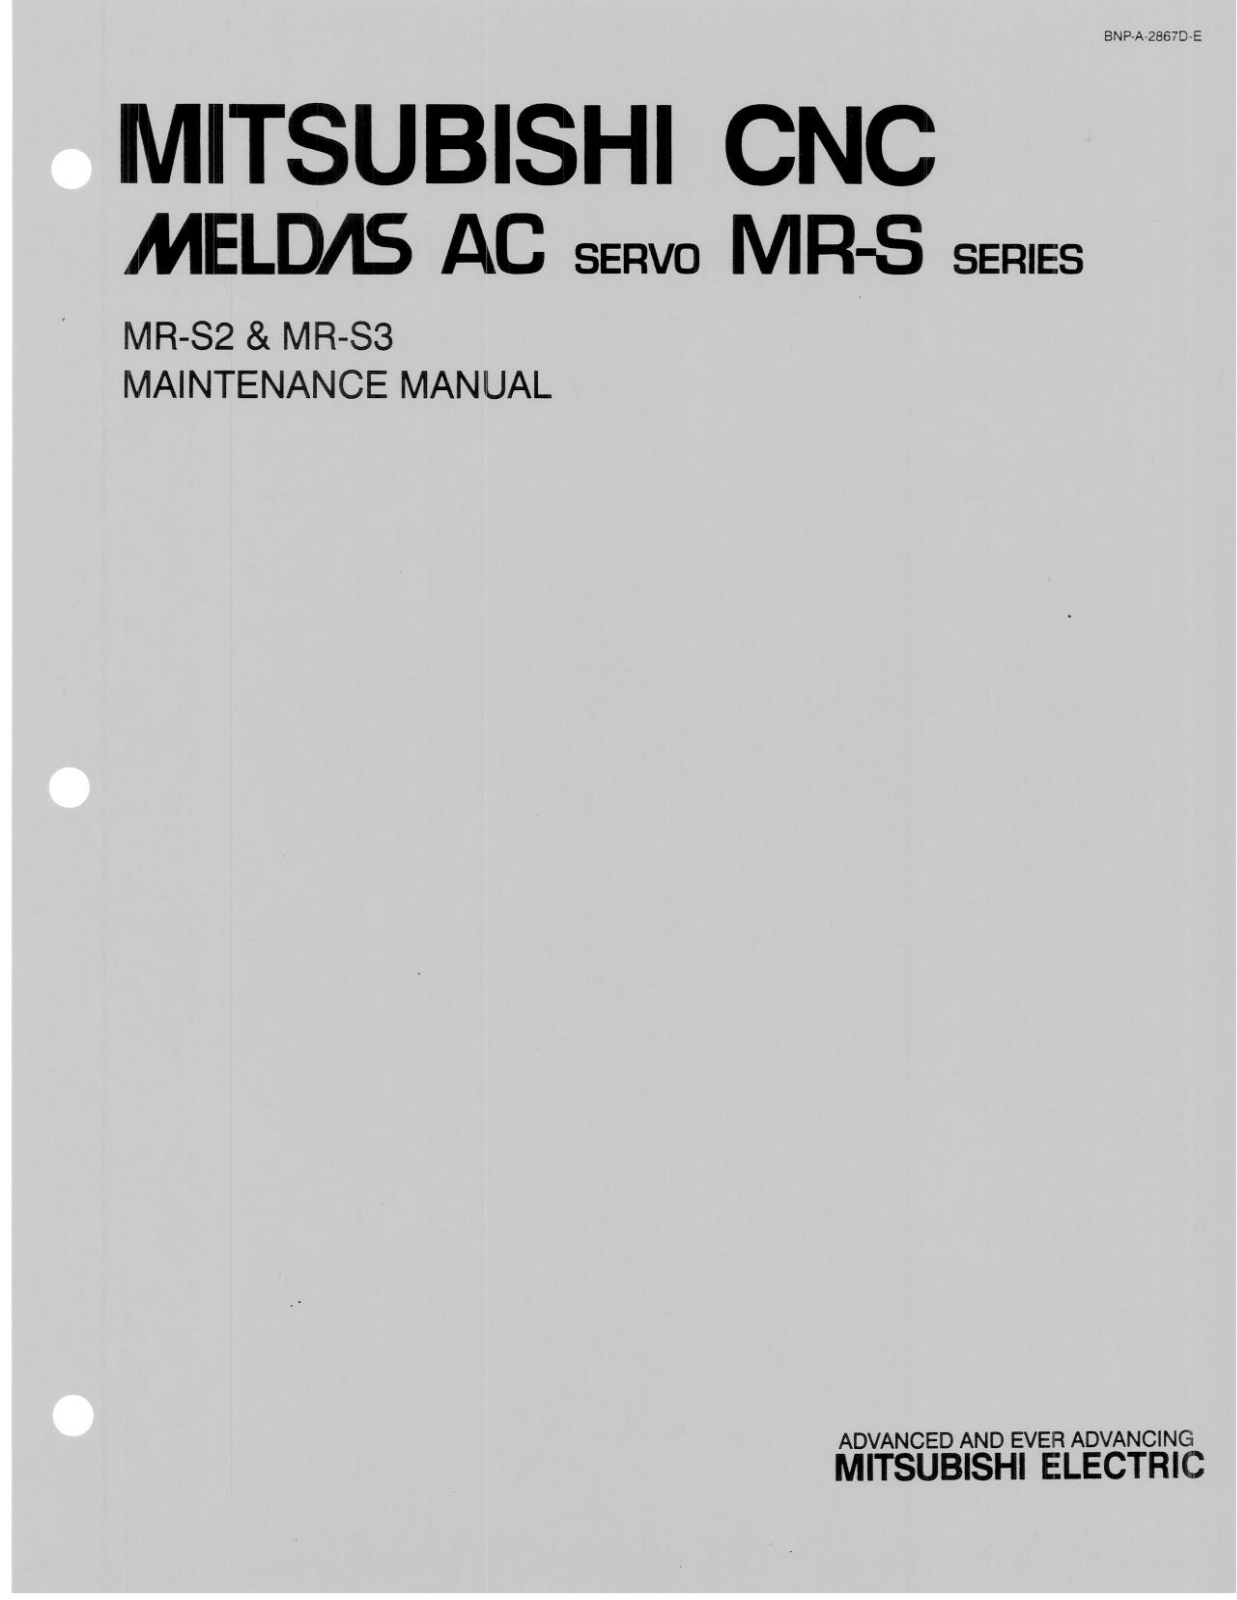 mitsubishi MR-S Maintenance Manual